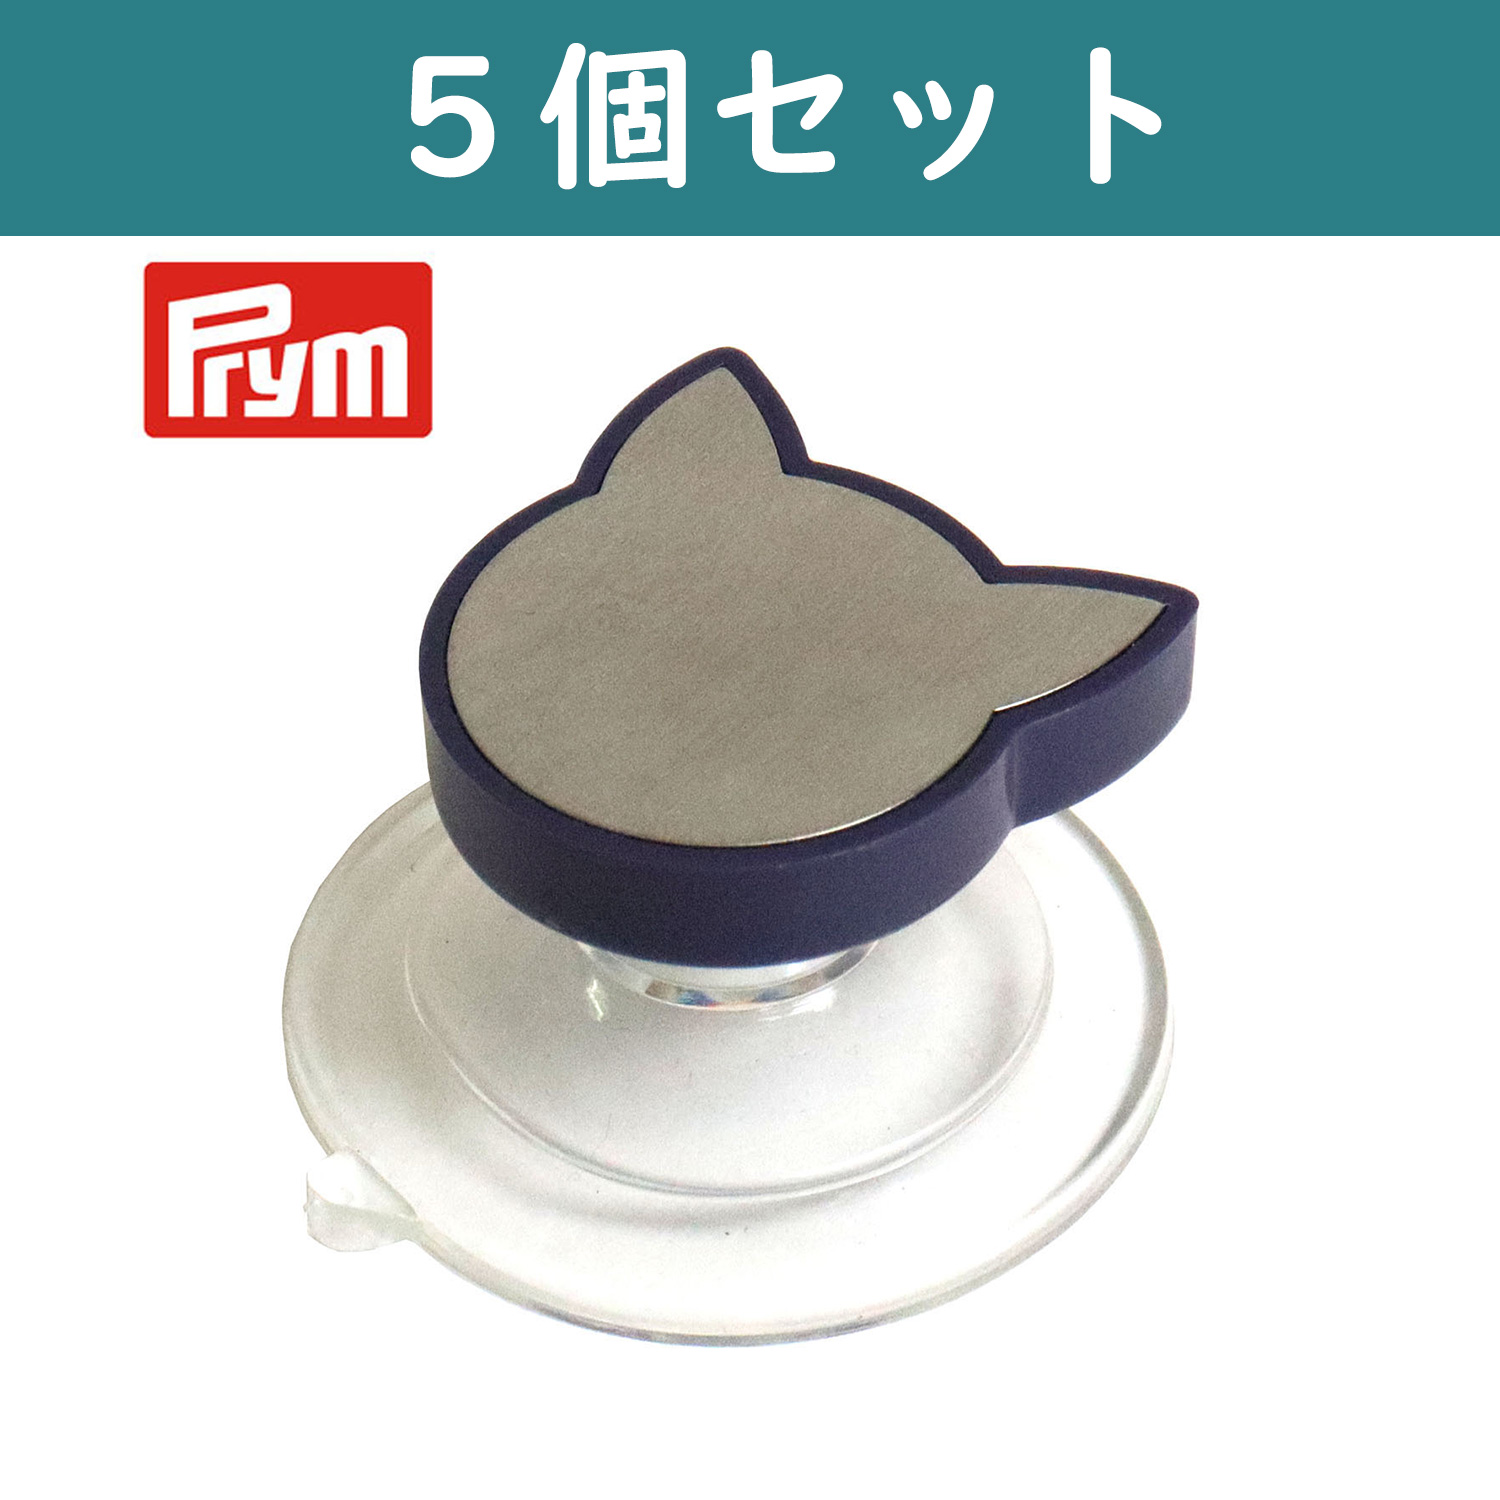 PRM610274-5 Prym Needle magnet (Pin magunet) 5pcs set(set)